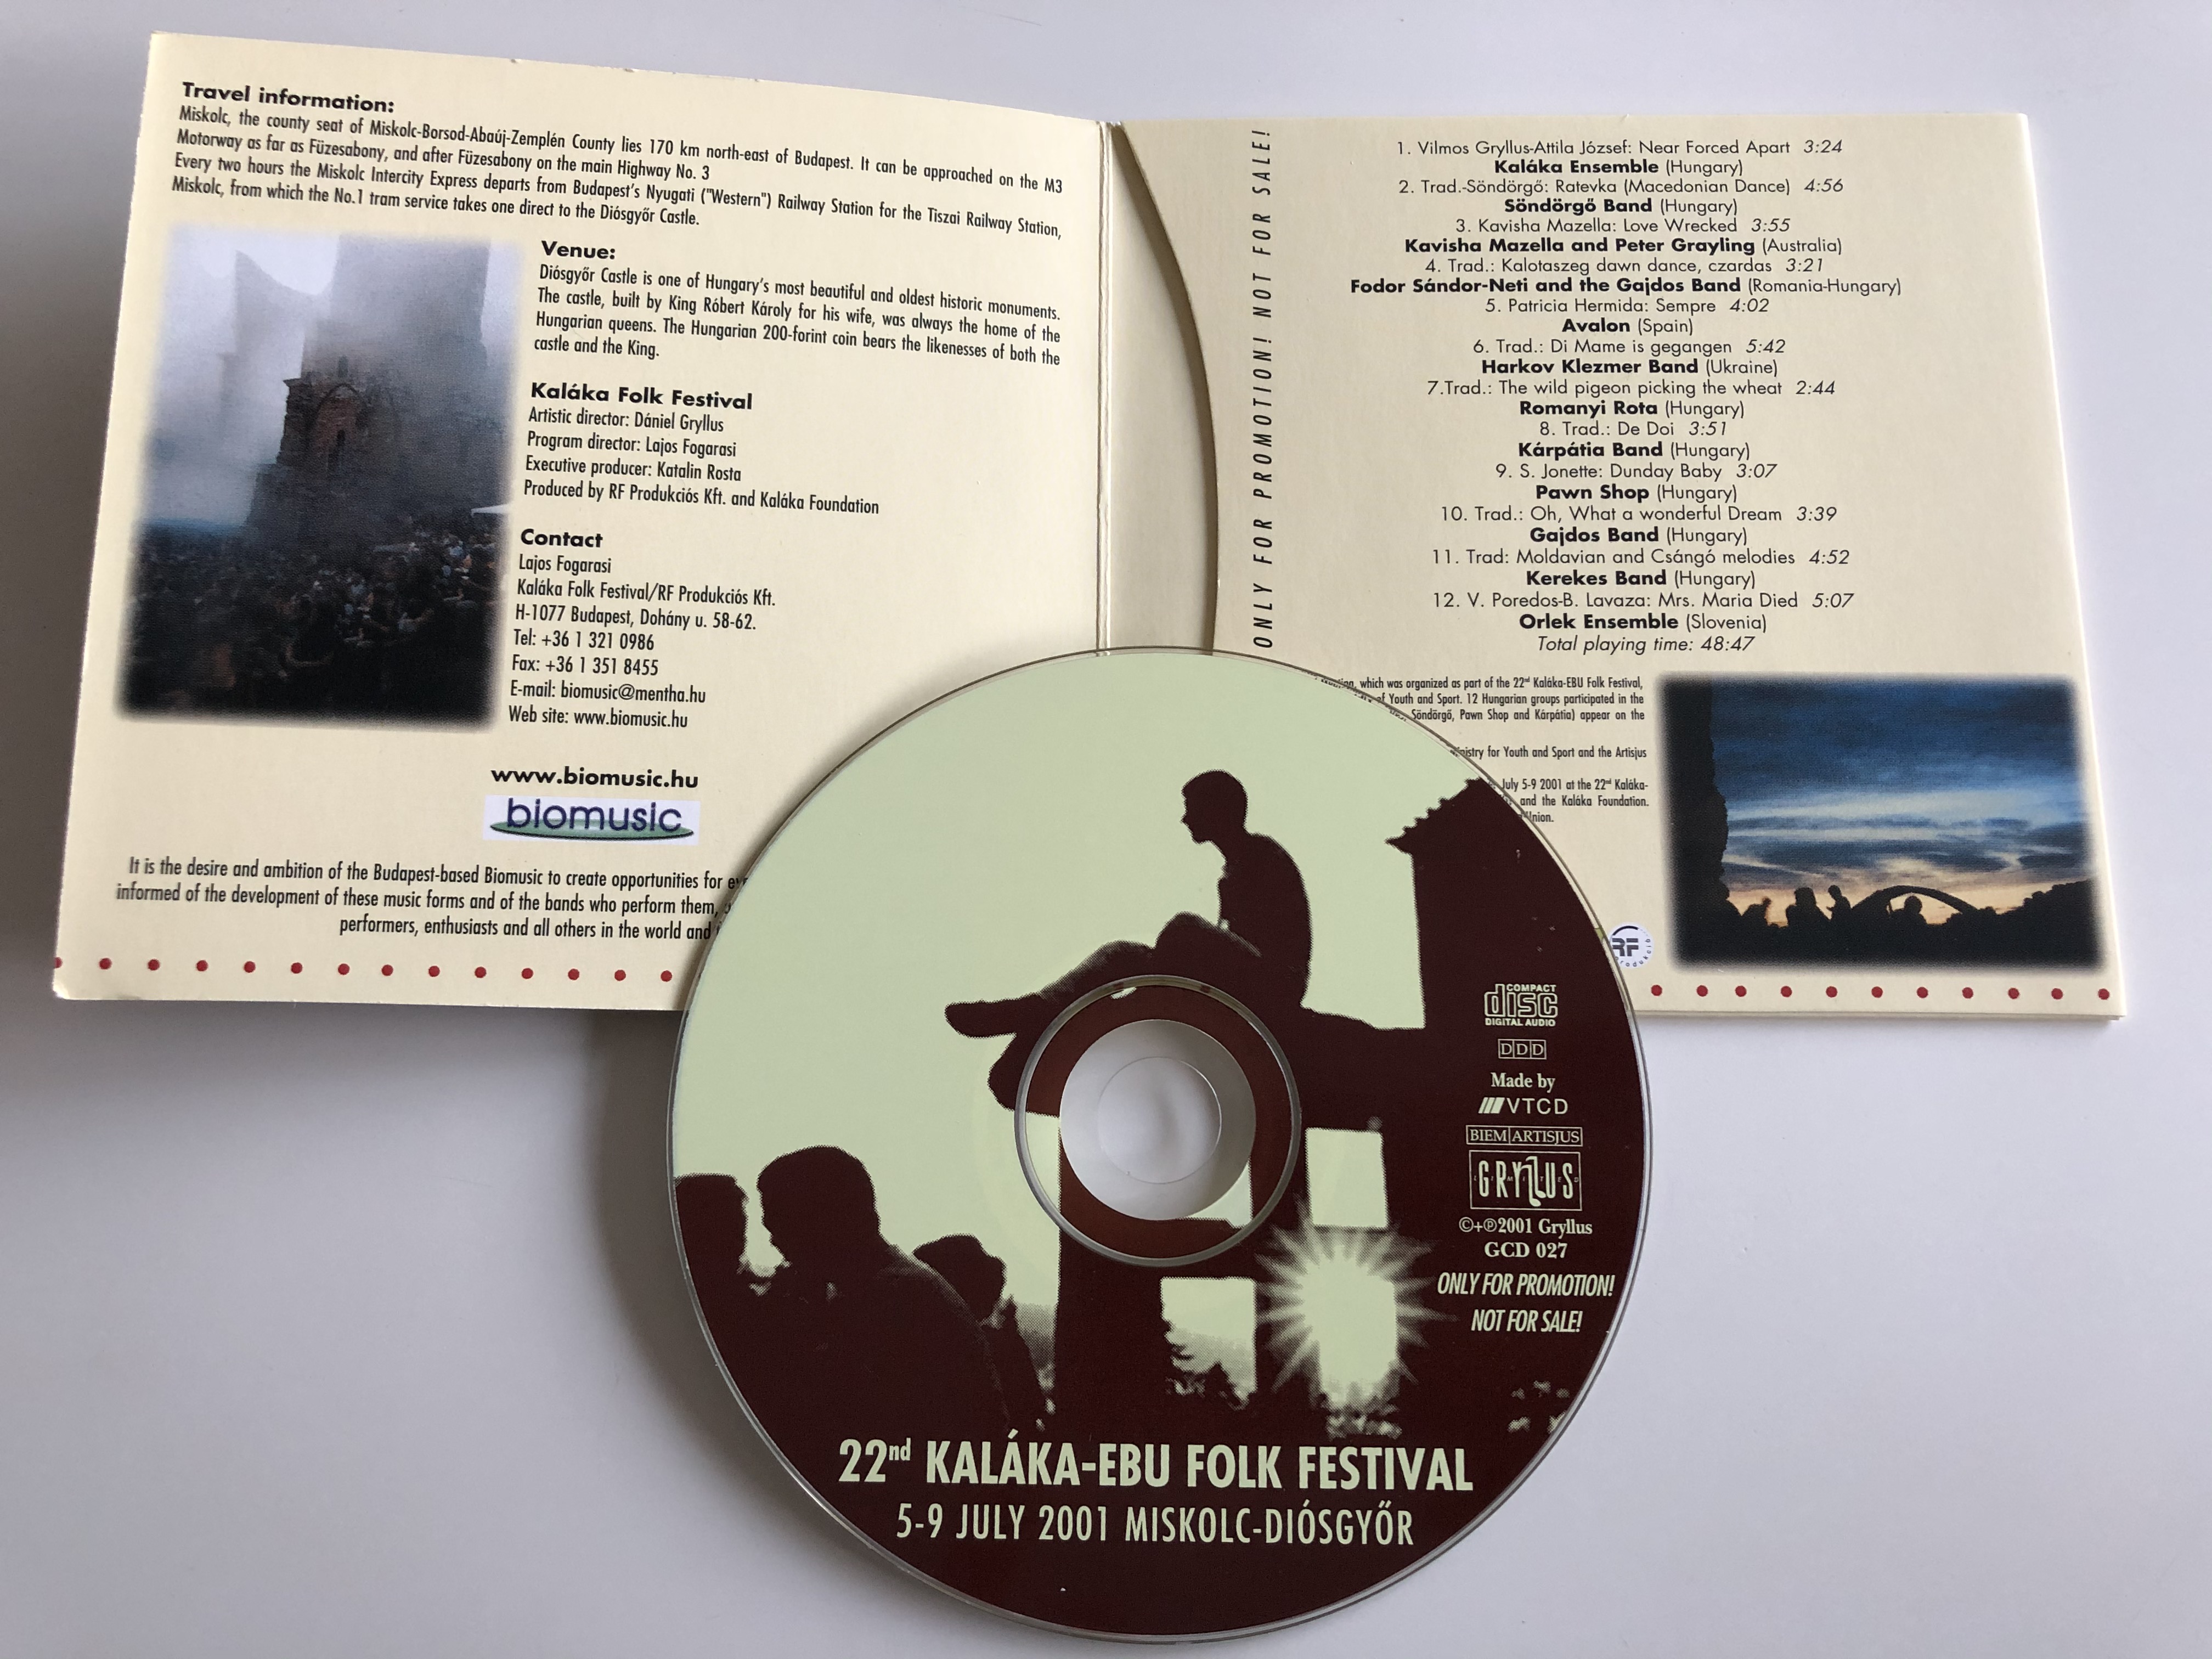 22nd-kalaka-ebu-folk-festival-5-9-july-2001-miskolc-diosgyor-gryllus-audio-cd-2001-gcd-027-4-.jpg